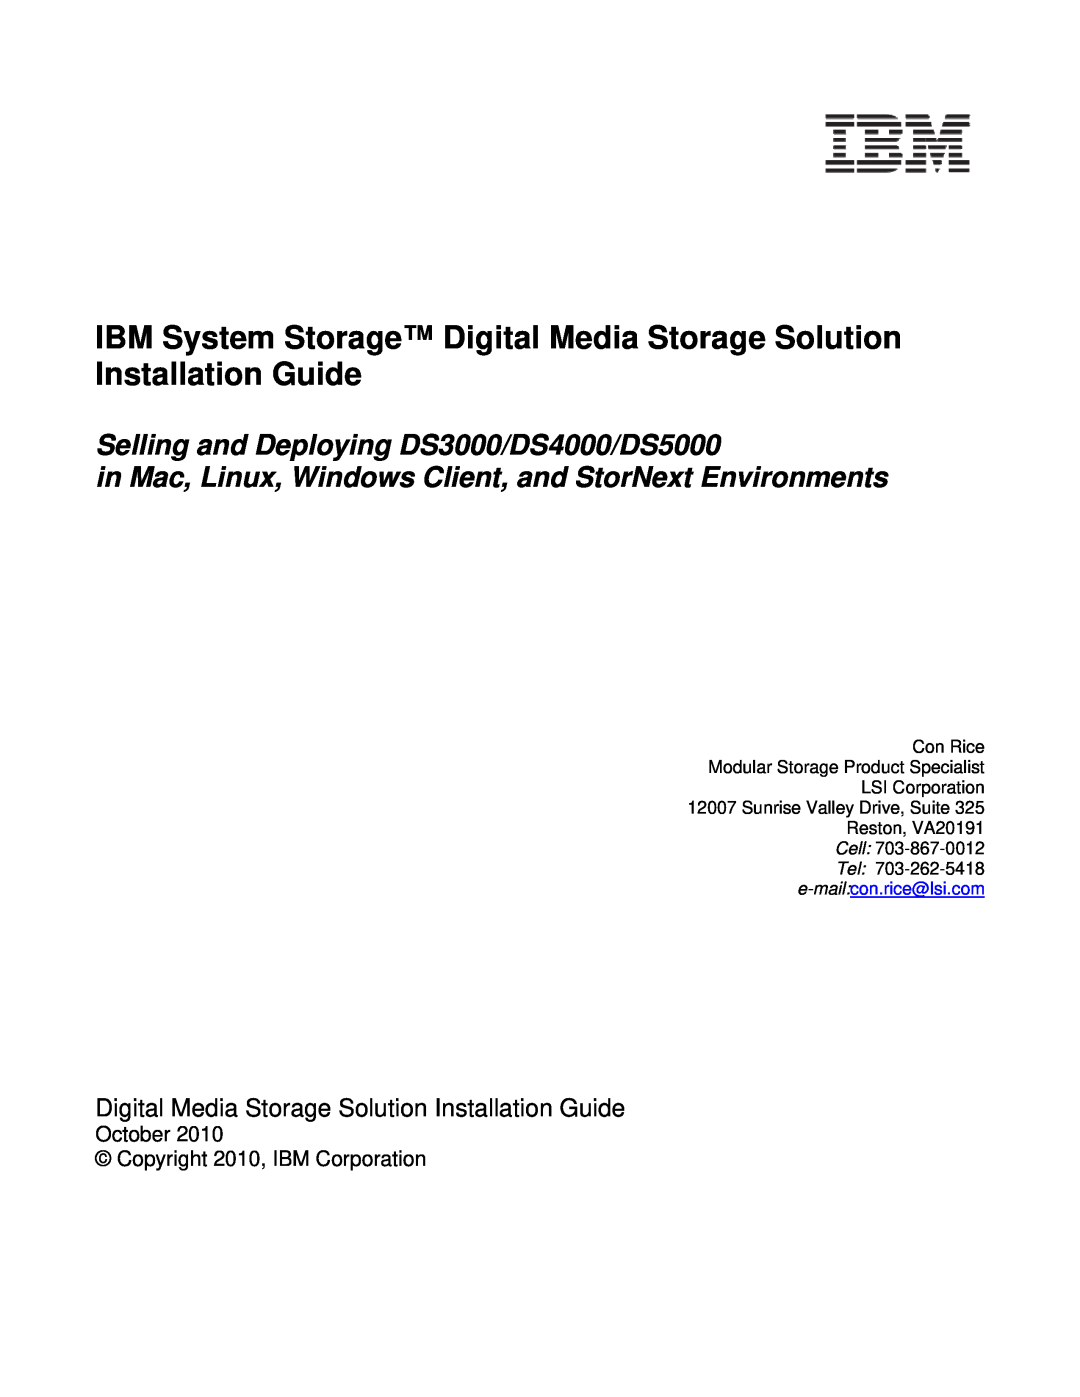 IBM manual Storage Manager Demo Guide Revision, DS3000 Storage Manager Demo Guide, January 17 